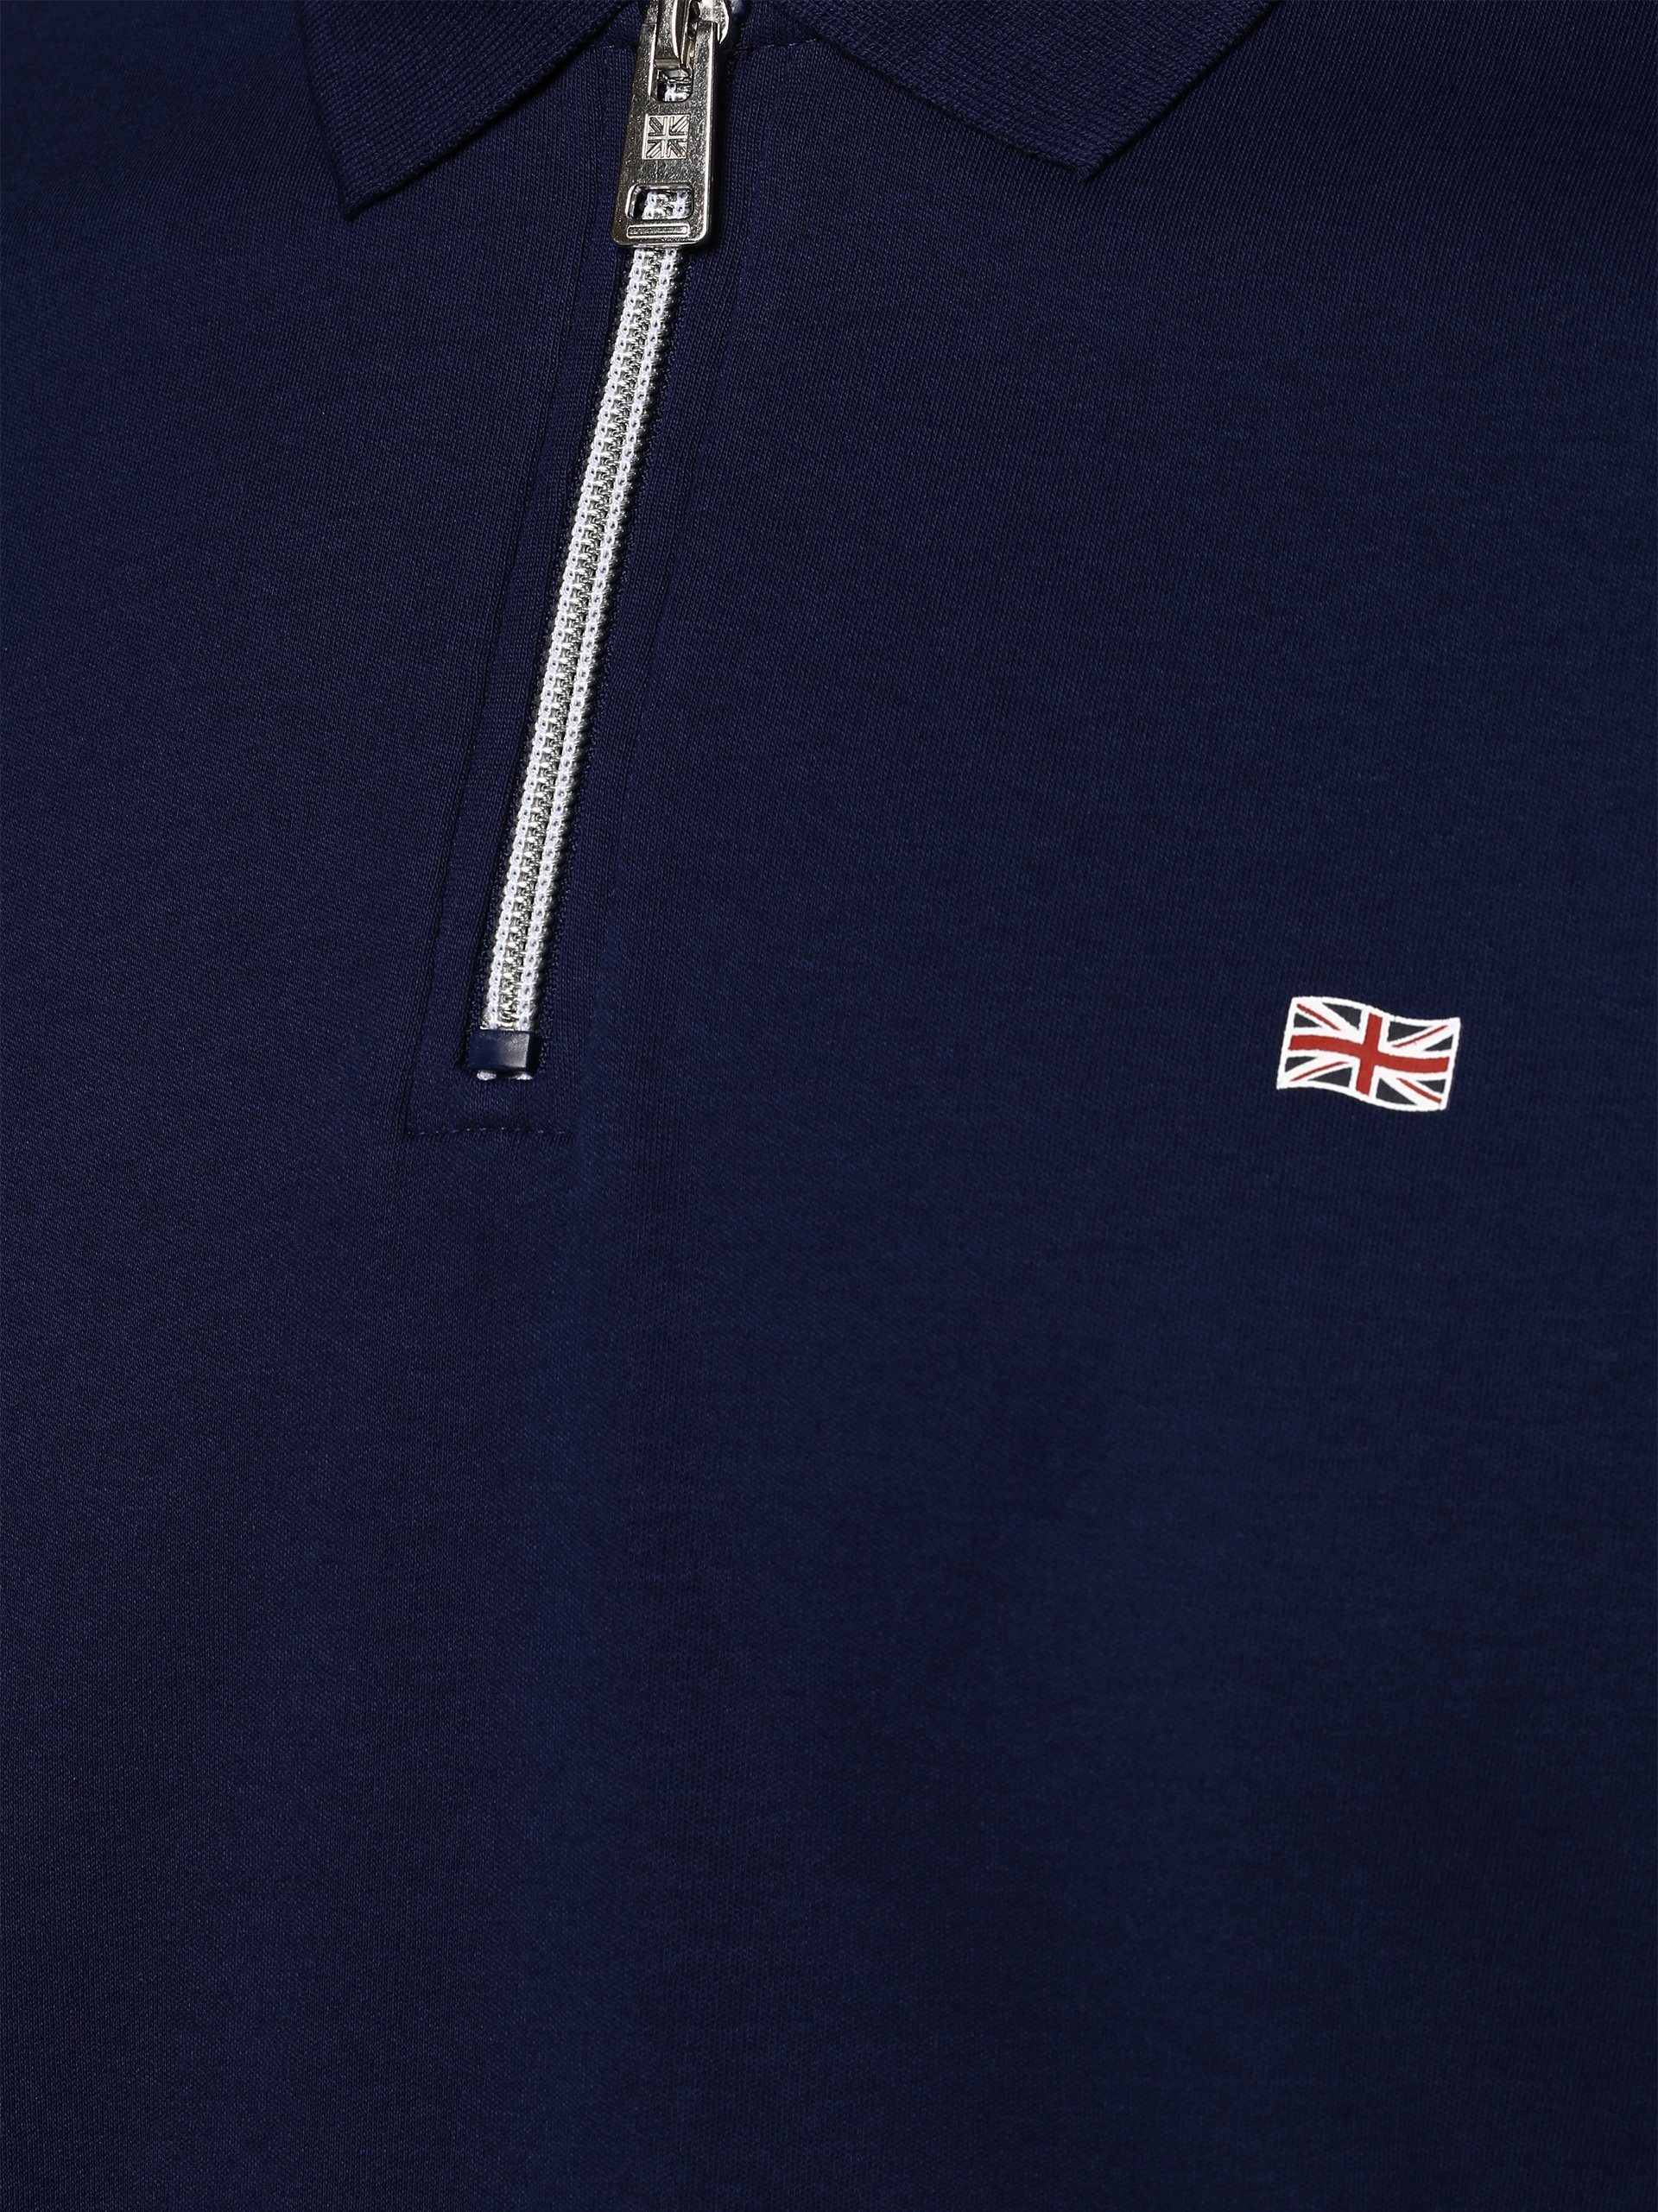 London Finshley & Harding Poloshirt